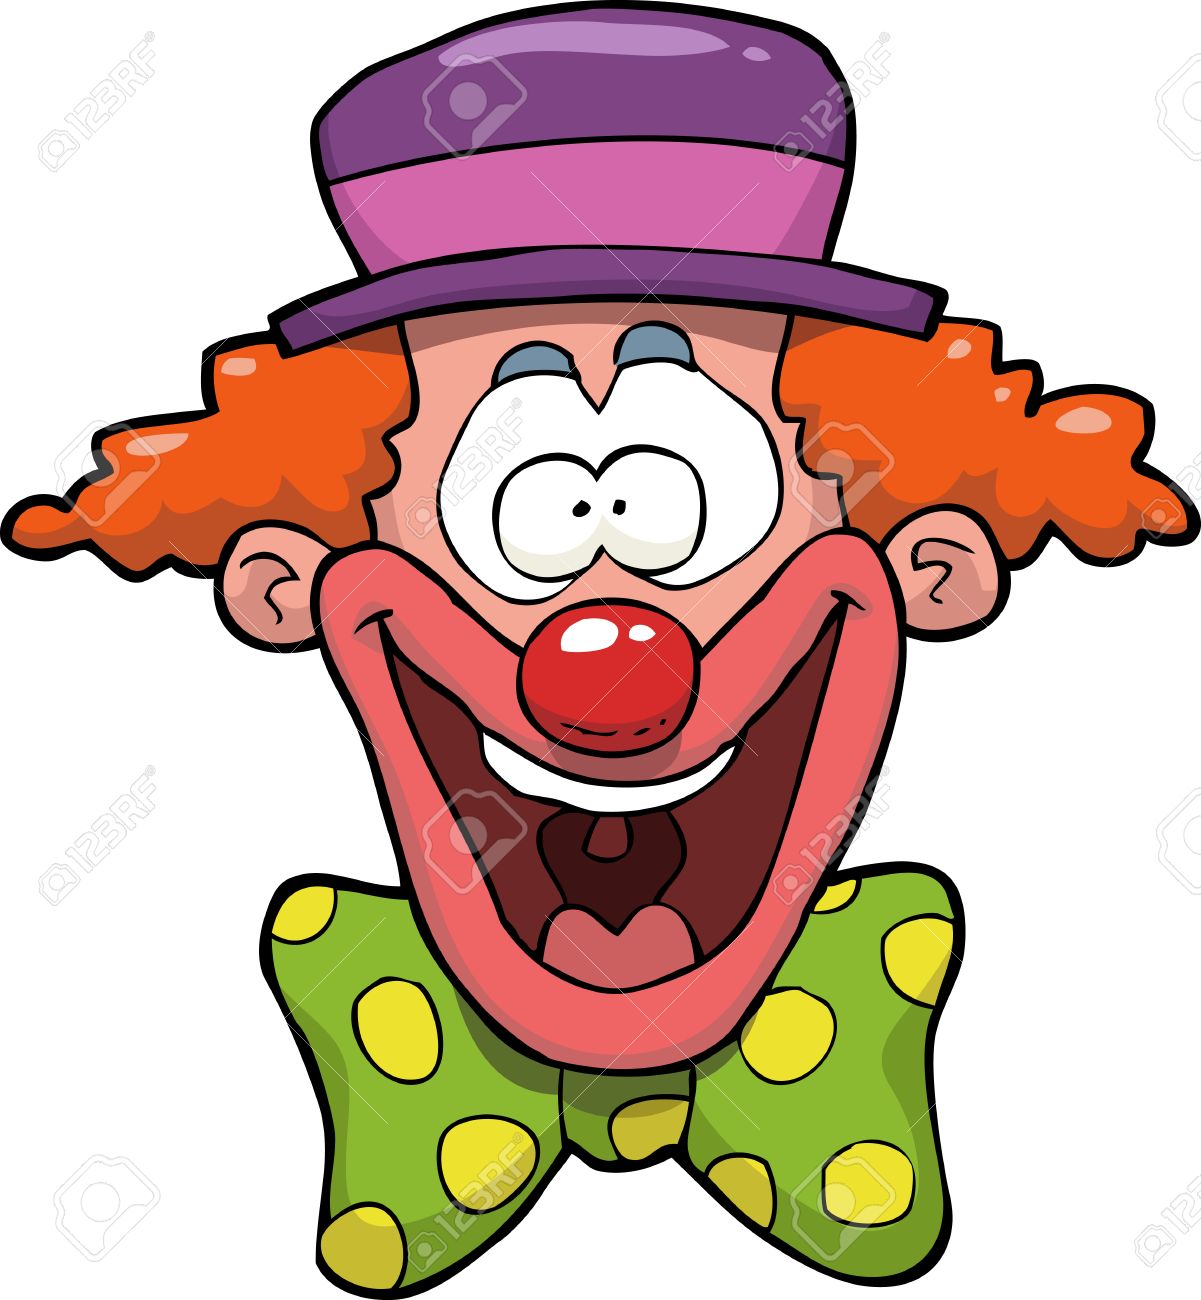 Cartoon doodle happy clown head vector illustration.